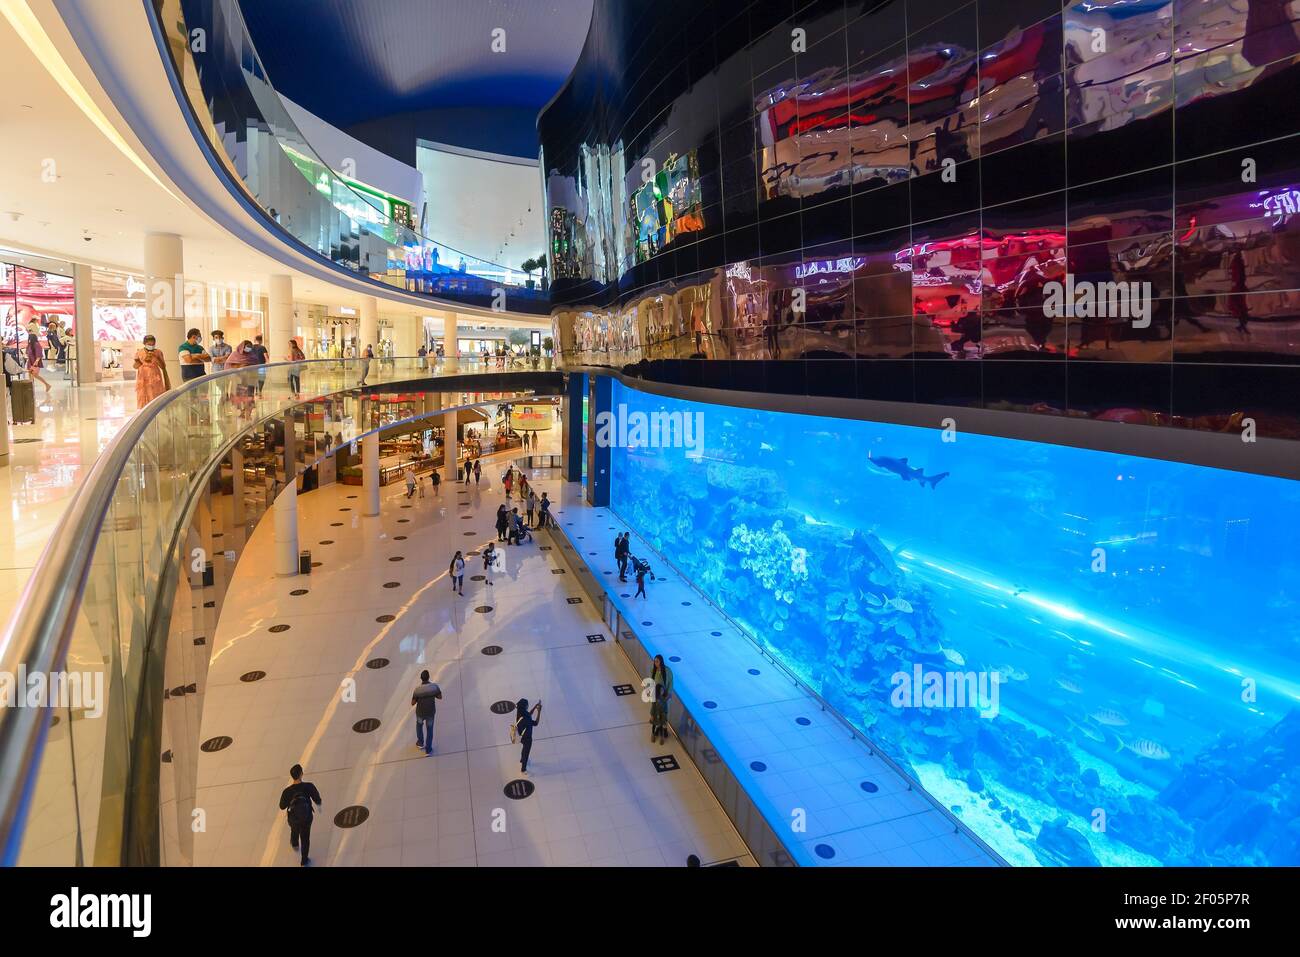 Acuario de Dubai y Zoo submarino dentro del Dubai Mall, el centro comercial más grande, situado en Dubai, Emiratos Árabes Unidos. Foto de stock